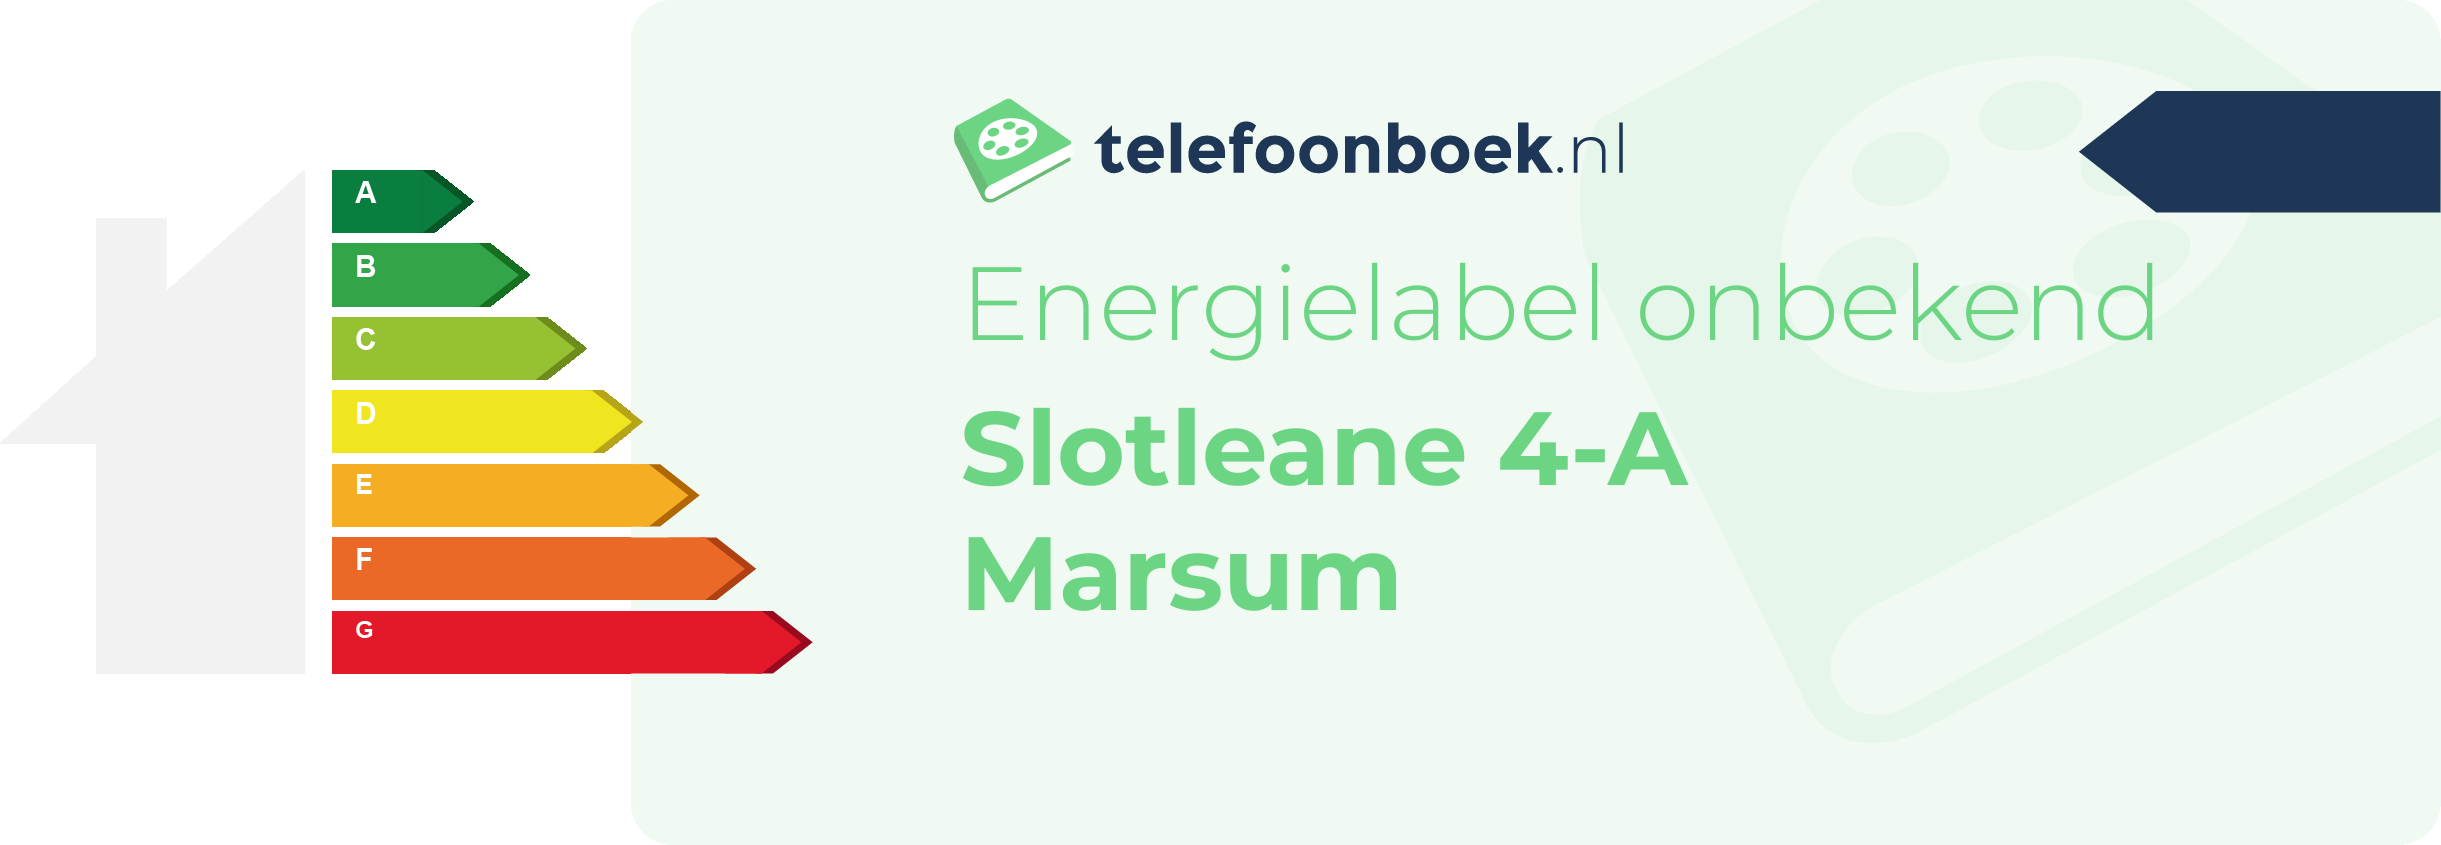 Energielabel Slotleane 4-A Marsum